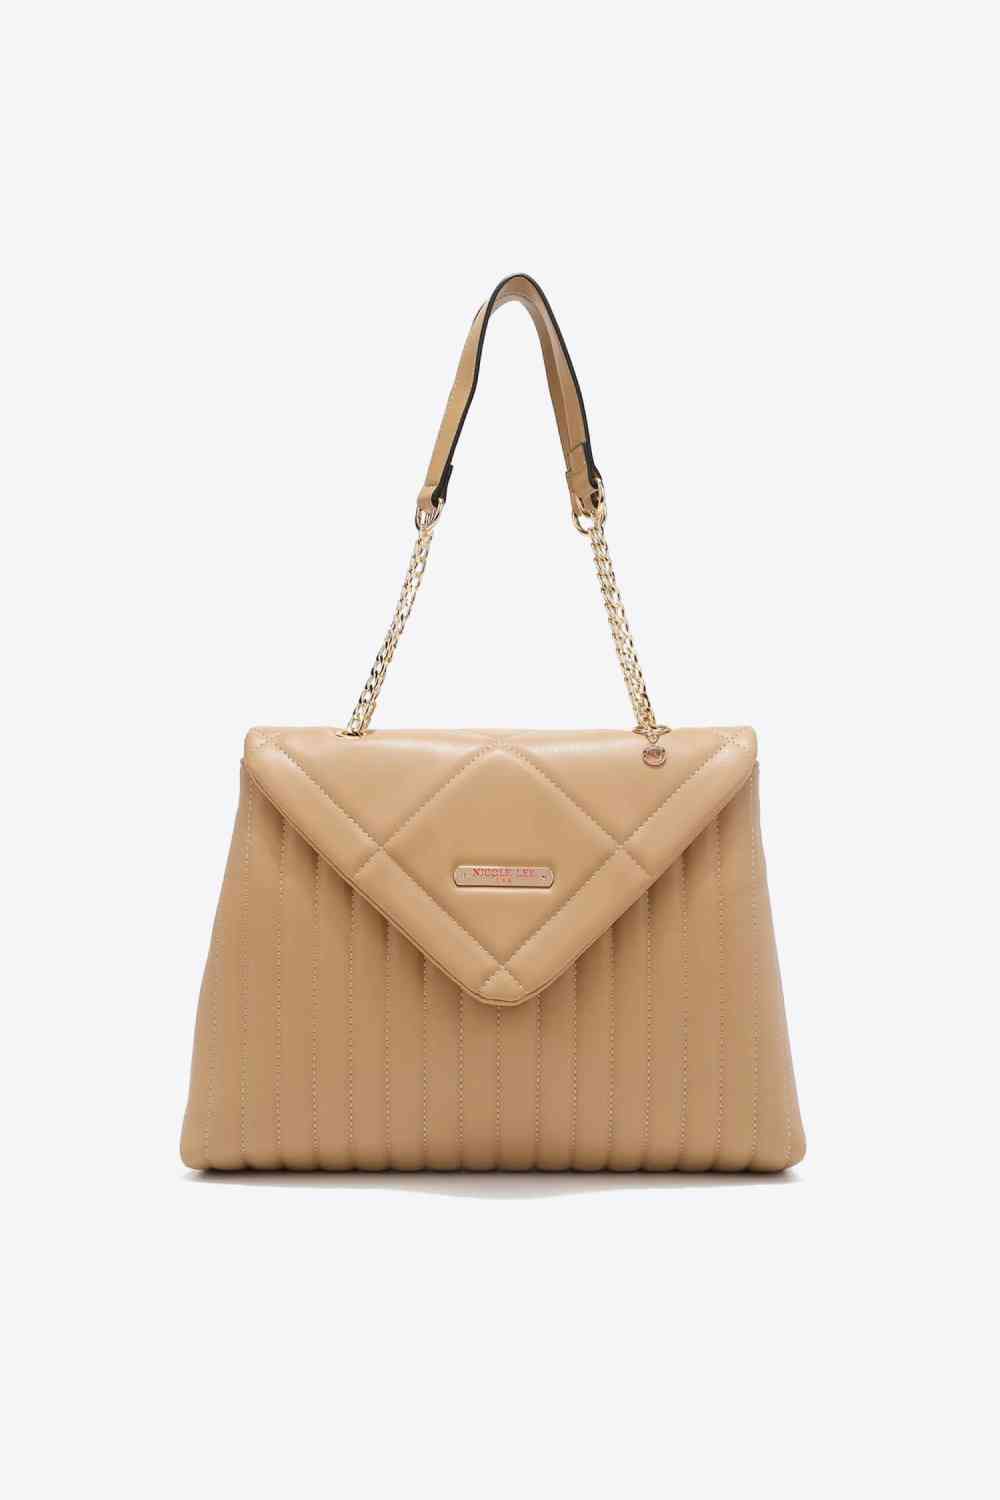 Nicole Lee USA A Nice Touch Handbag Taupe One Size